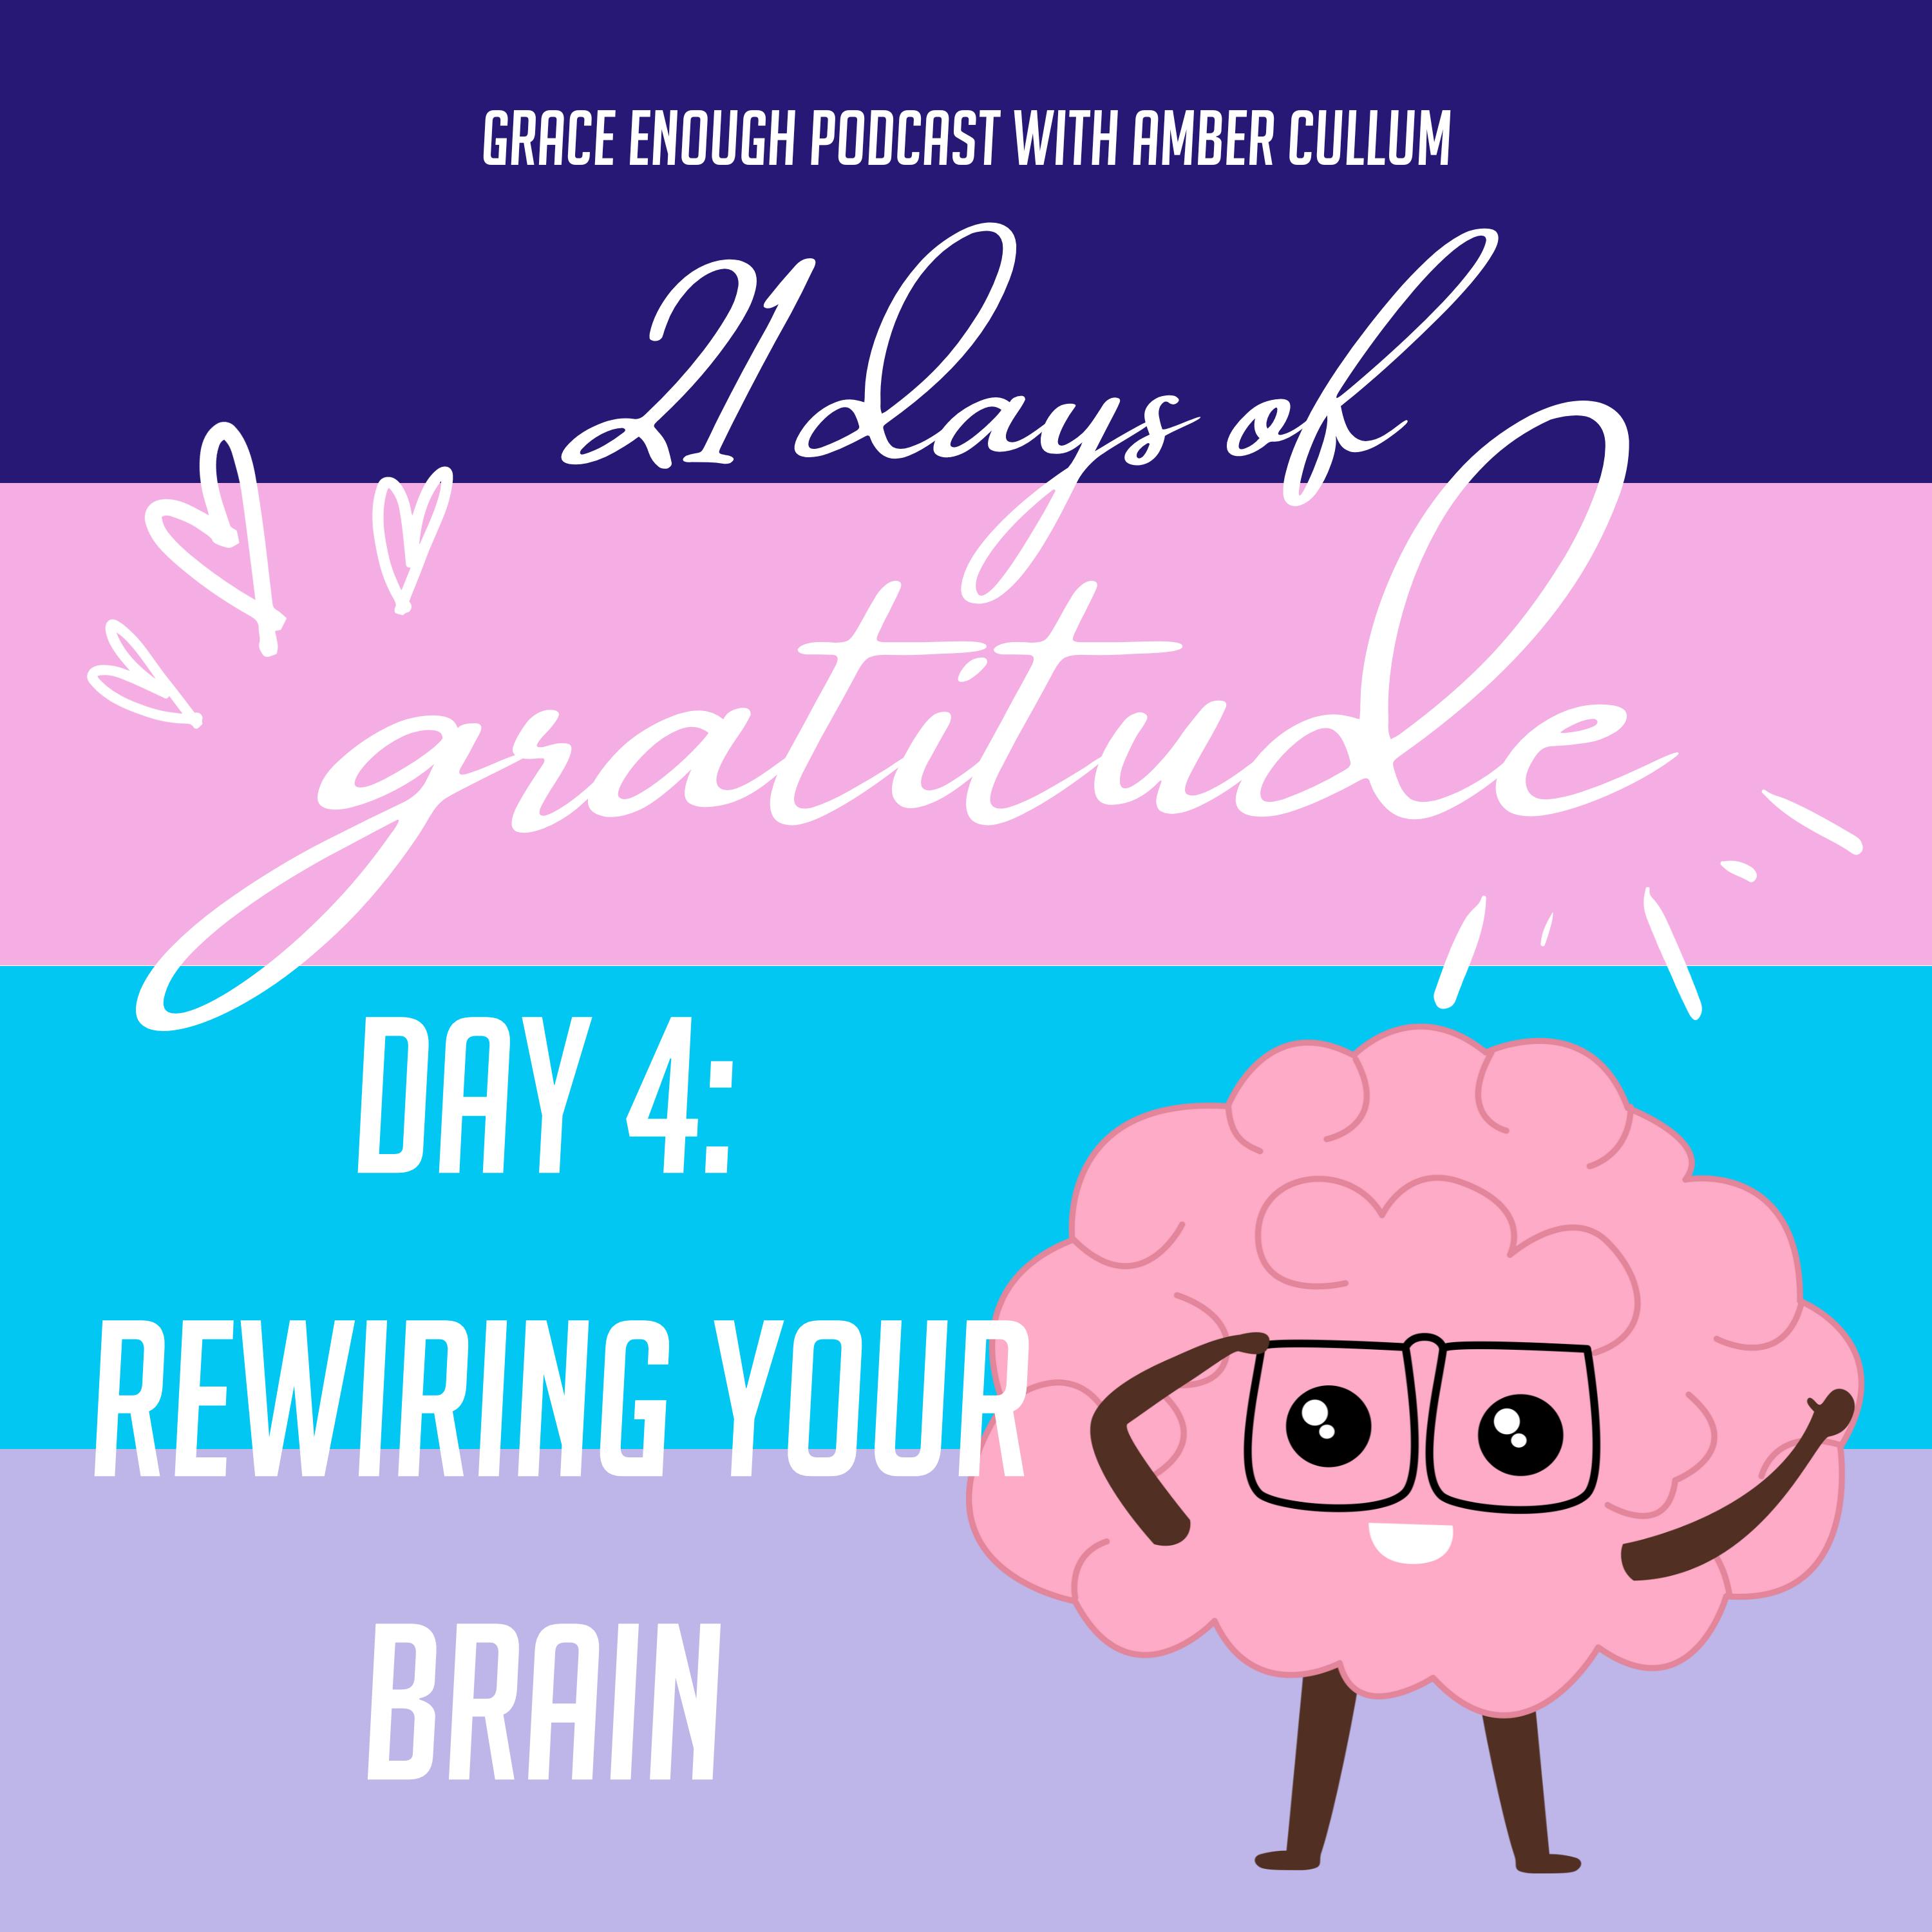 4/21 Days of Gratitude: Rewiring Your Brain